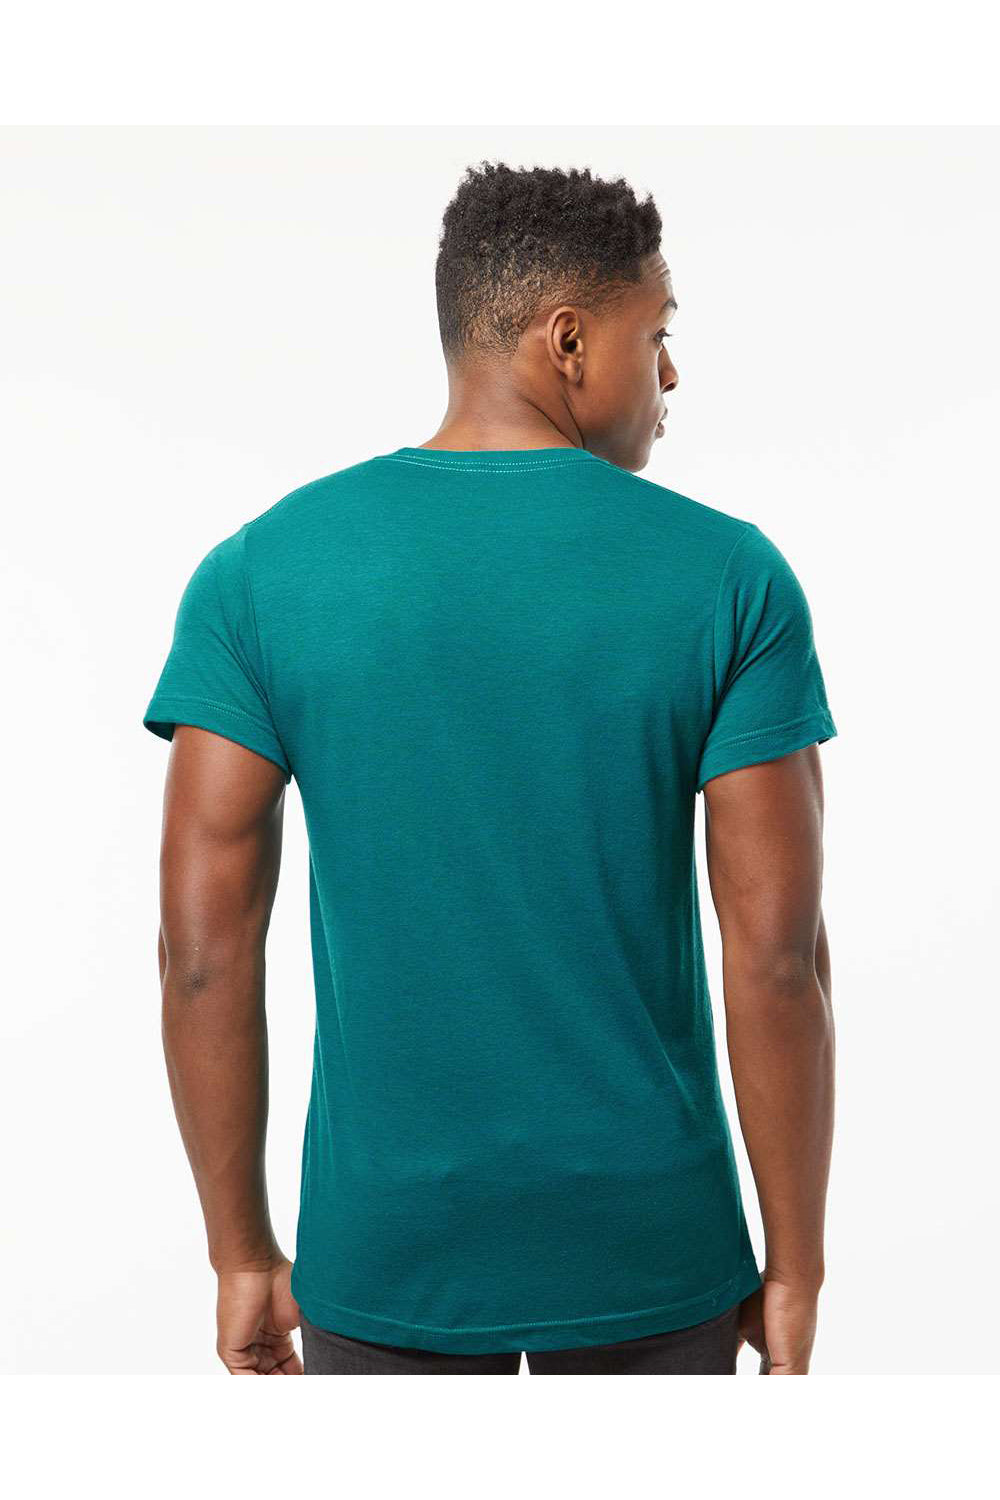 Tultex 254 Mens Short Sleeve Crewneck T-Shirt Jade Green Model Back